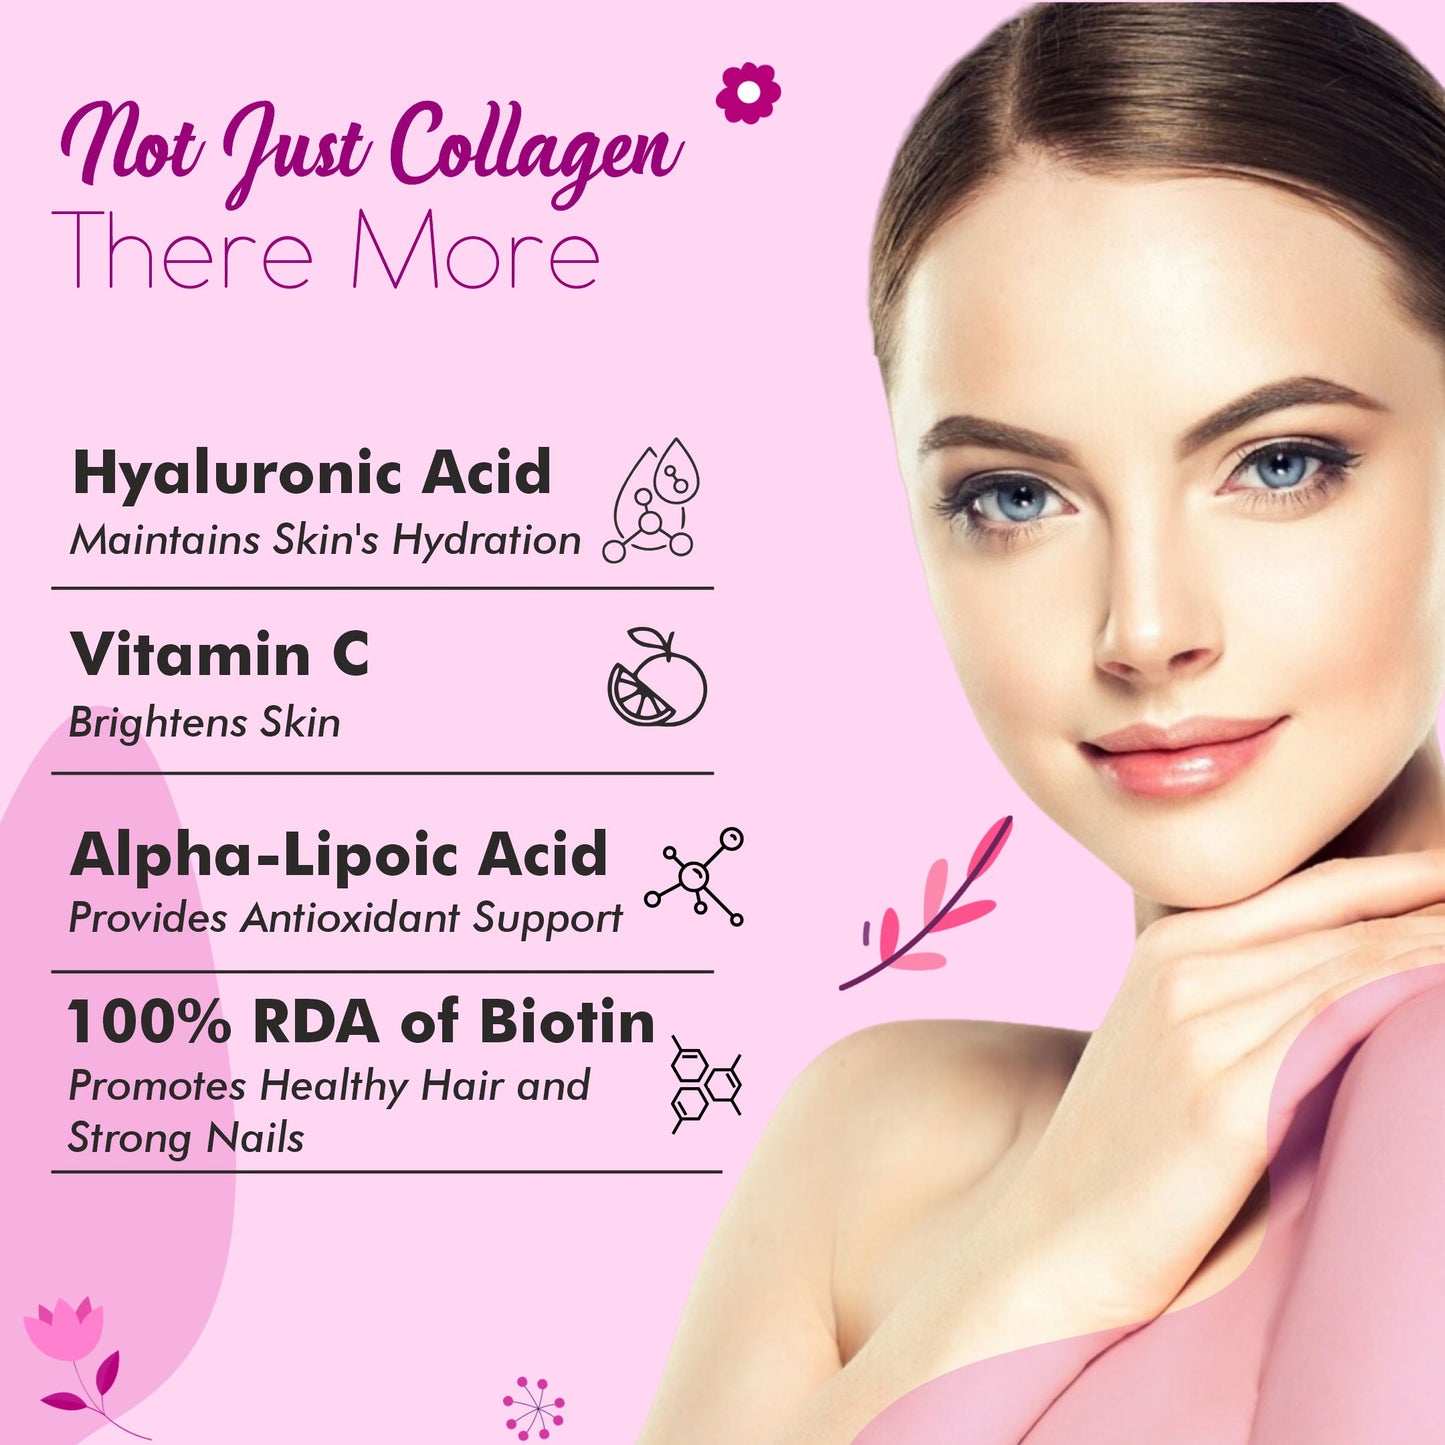 Vitaminnica Vita Beauty Collagen Powder- MixBerry Flavour | Vitamin C, Glutathione, Hyaluronic Acid, Biotin 180g-30 servings - Vitaminnica Healthcare